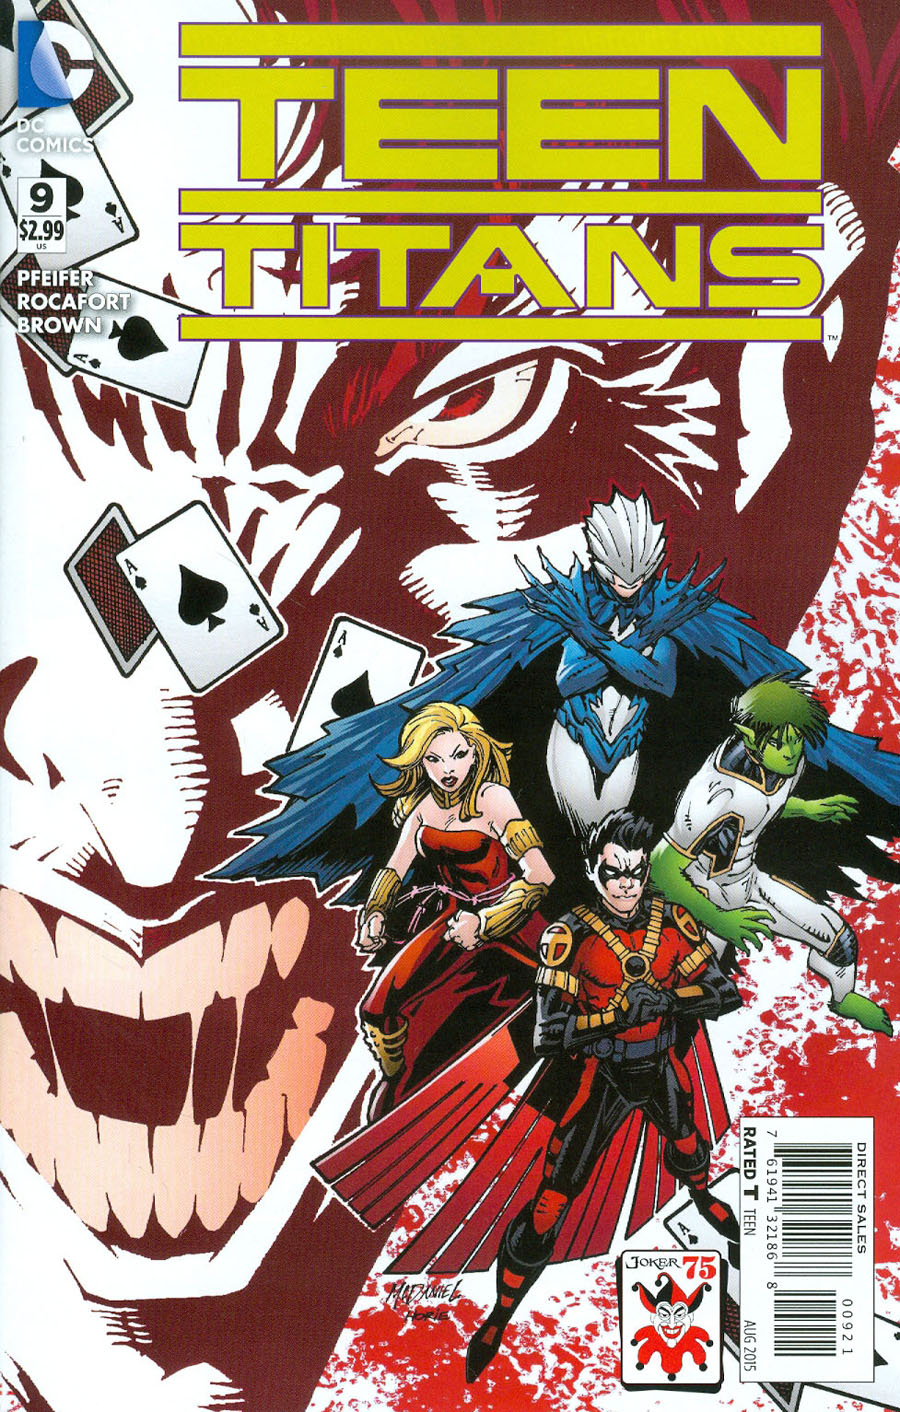 Teen Titans Vol 5 #9 Cover B Variant Scott McDaniel The Joker 75th Anniversary Cover